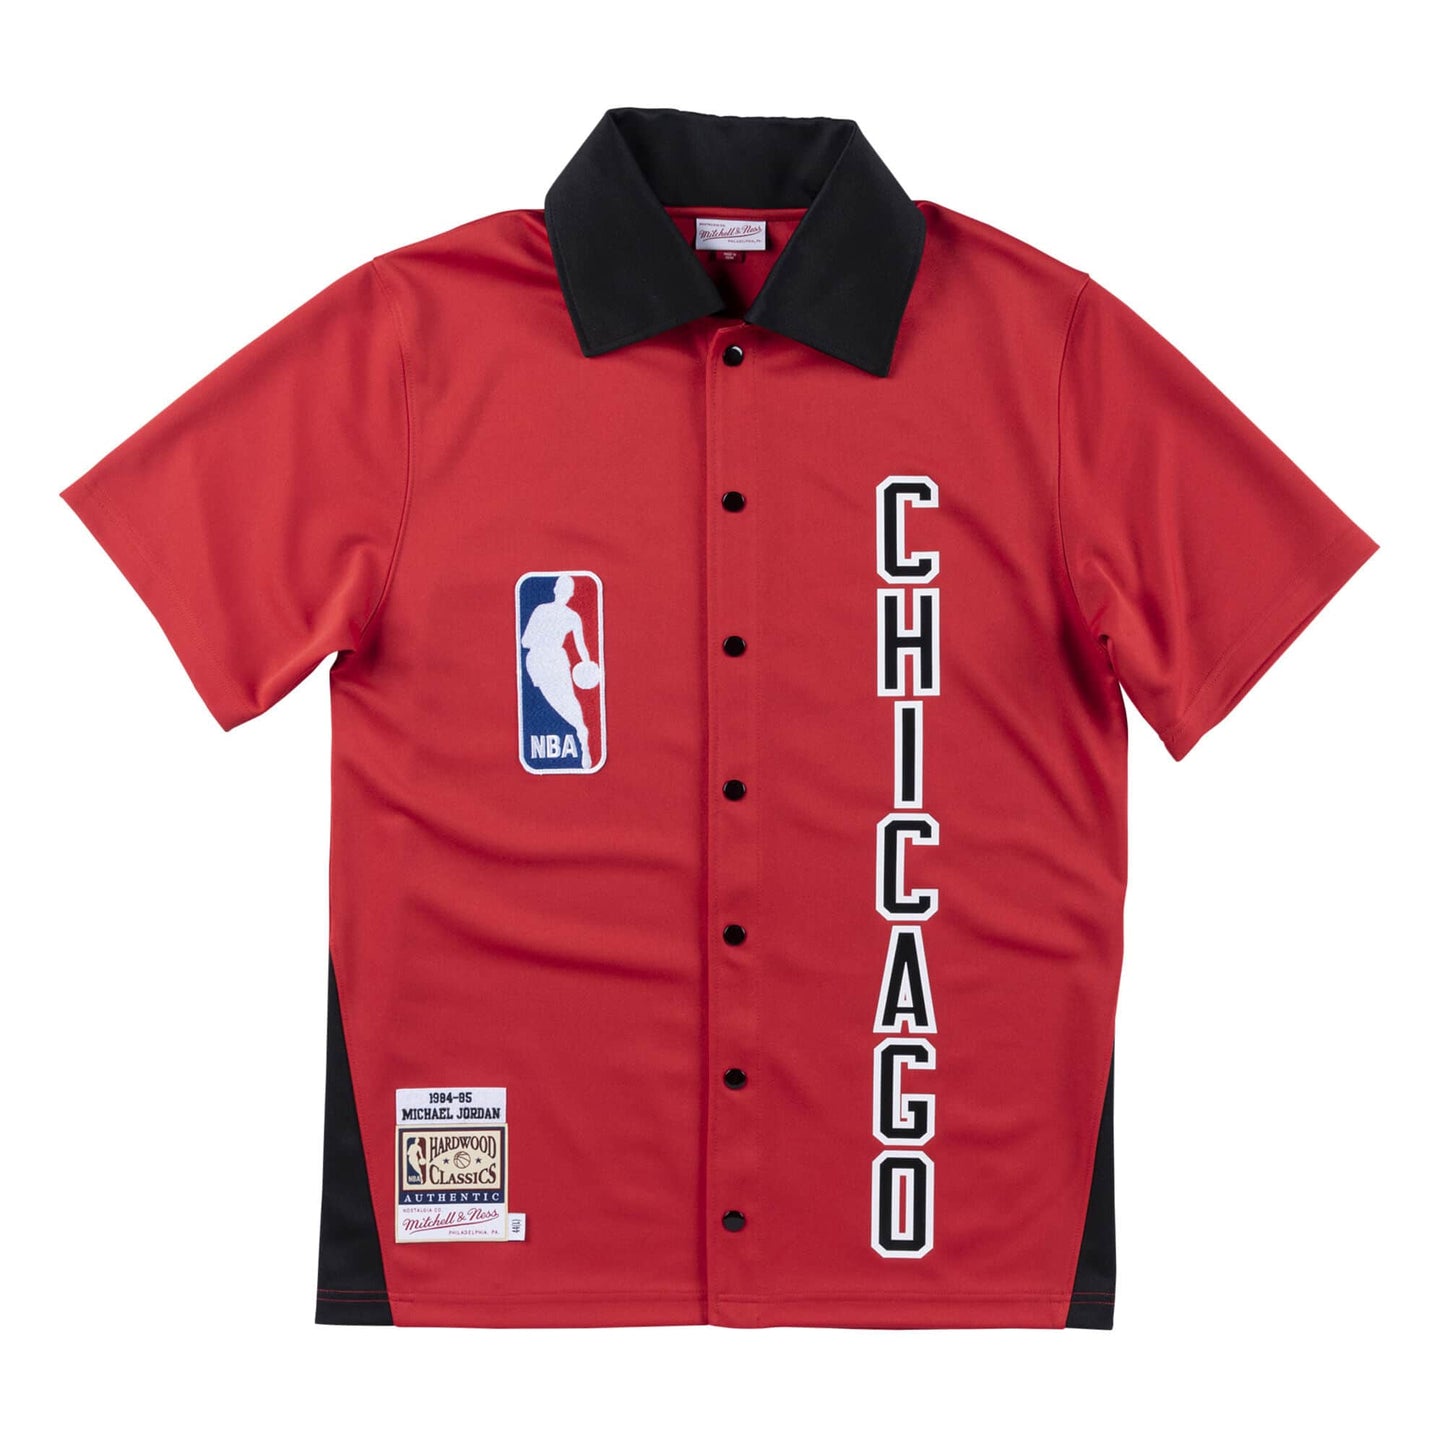 Authentic Shooting Shirt Chicago Bulls 1984-85 Michael Jordans